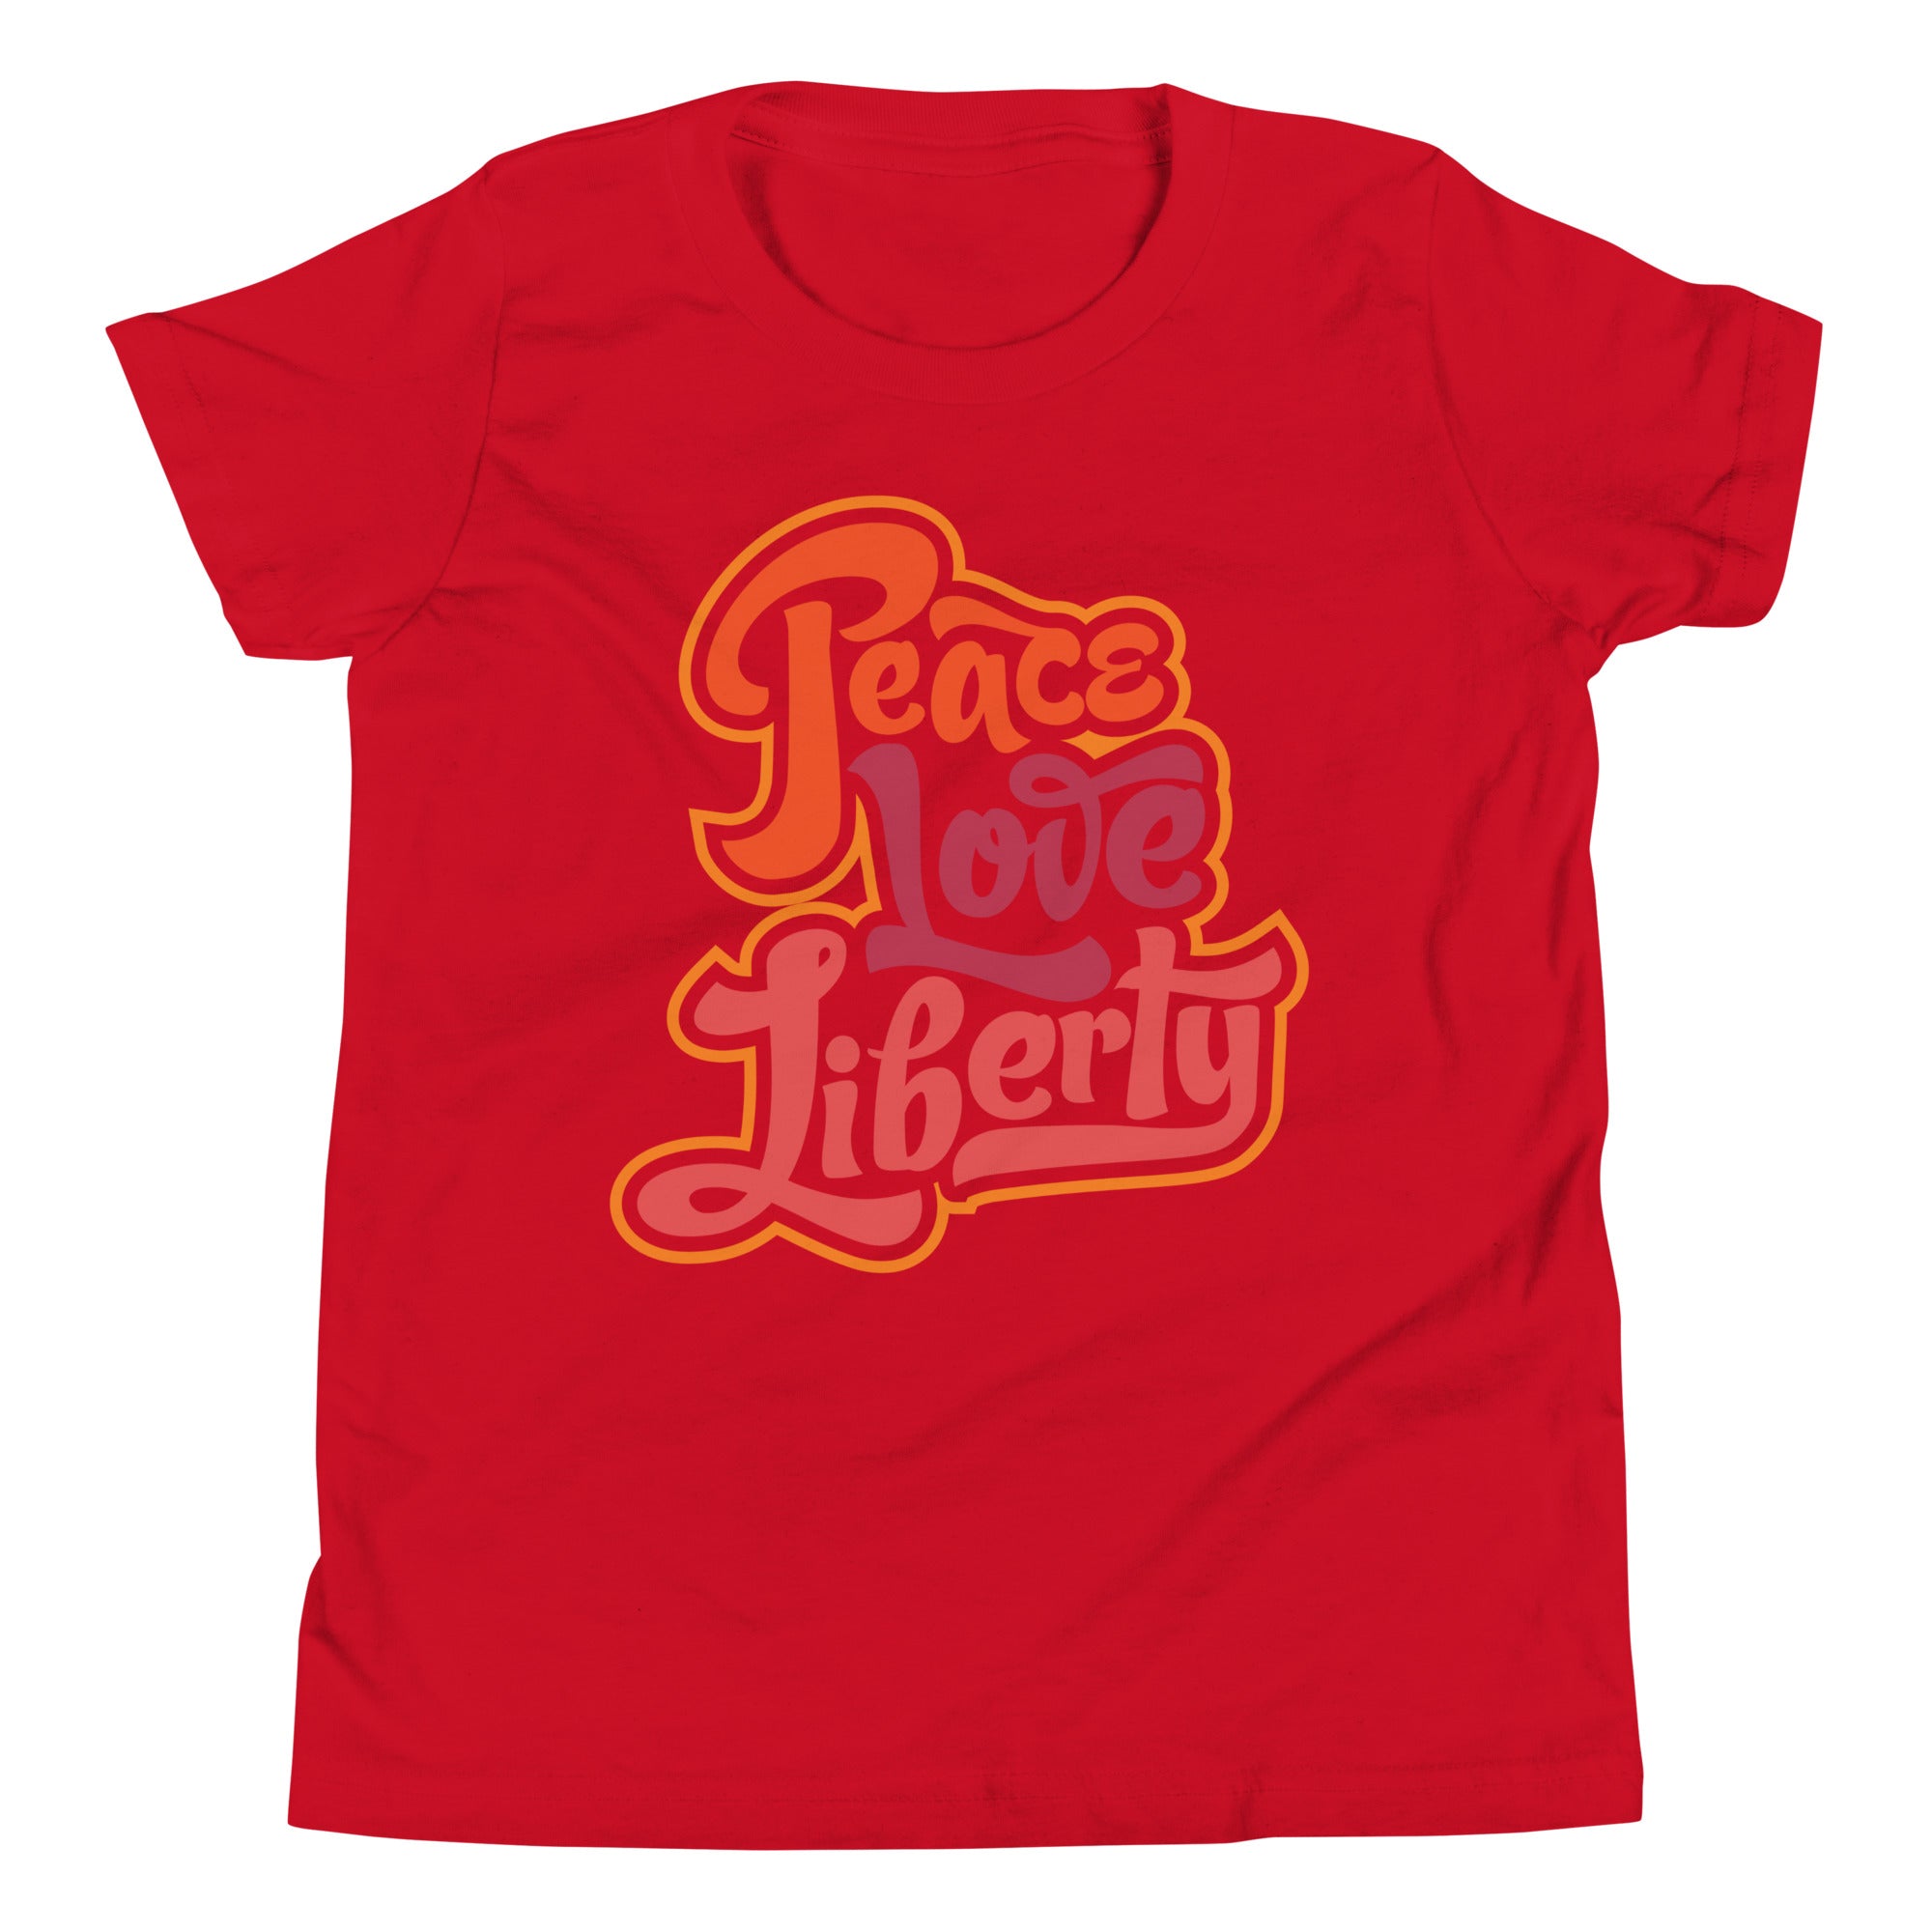 Peace Love Liberty Youth Short Sleeve T-Shirt